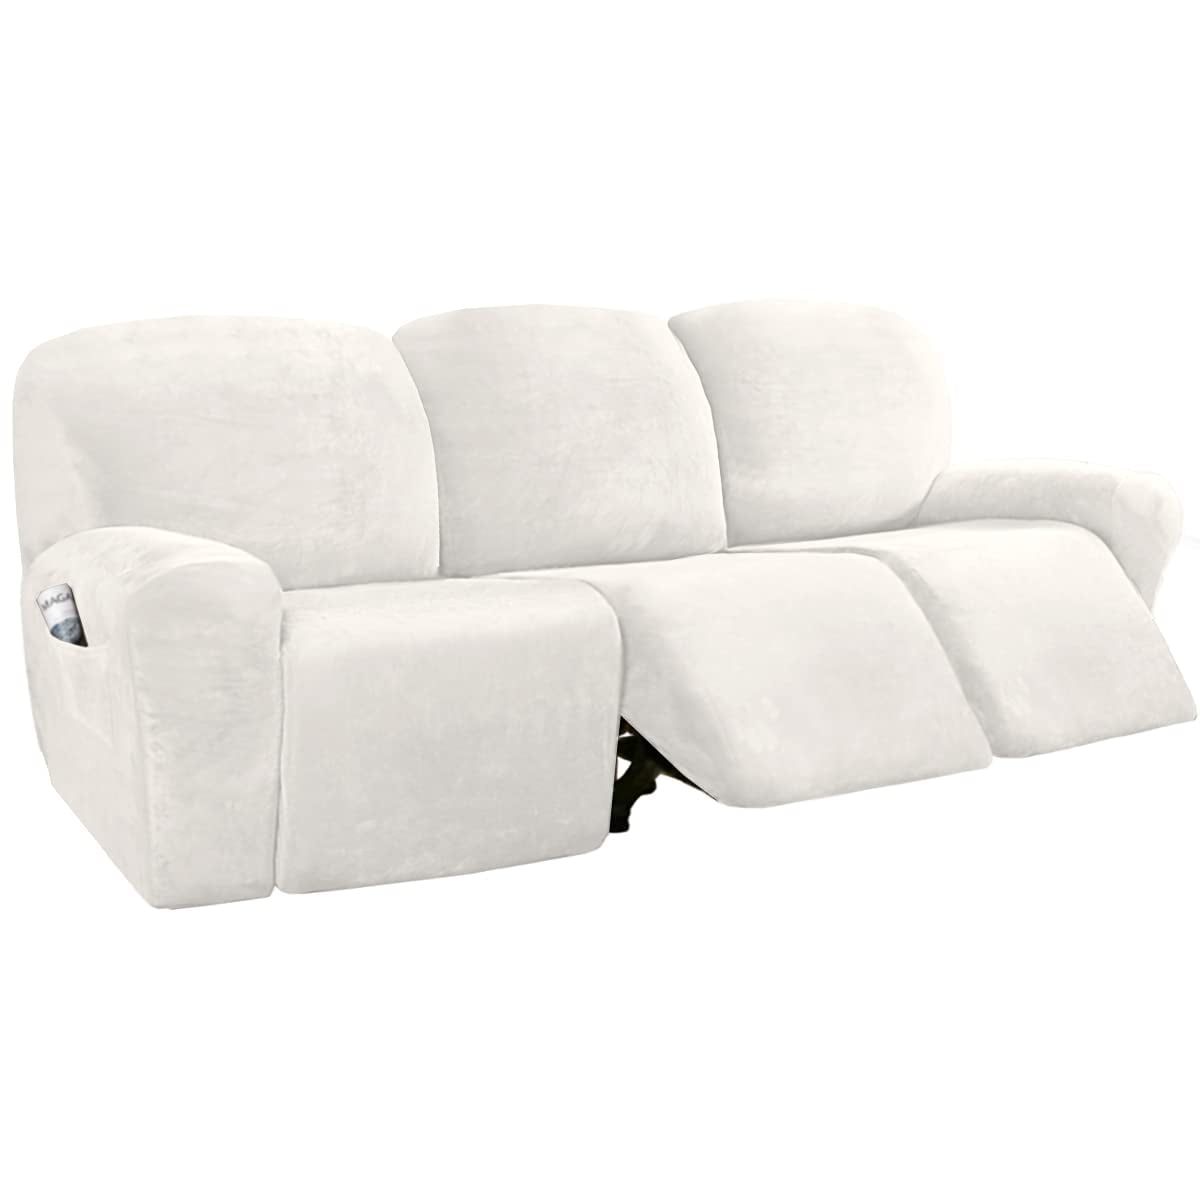 3 Piece XL Sofa Cushion Covers, Taupe H.VERSAILTEX Super Stretch Individual Seat Cushion Covers Sofa Covers Couch Cushion Covers Slipcovers Featuring Thick Jacquard Textured Twill Fabric